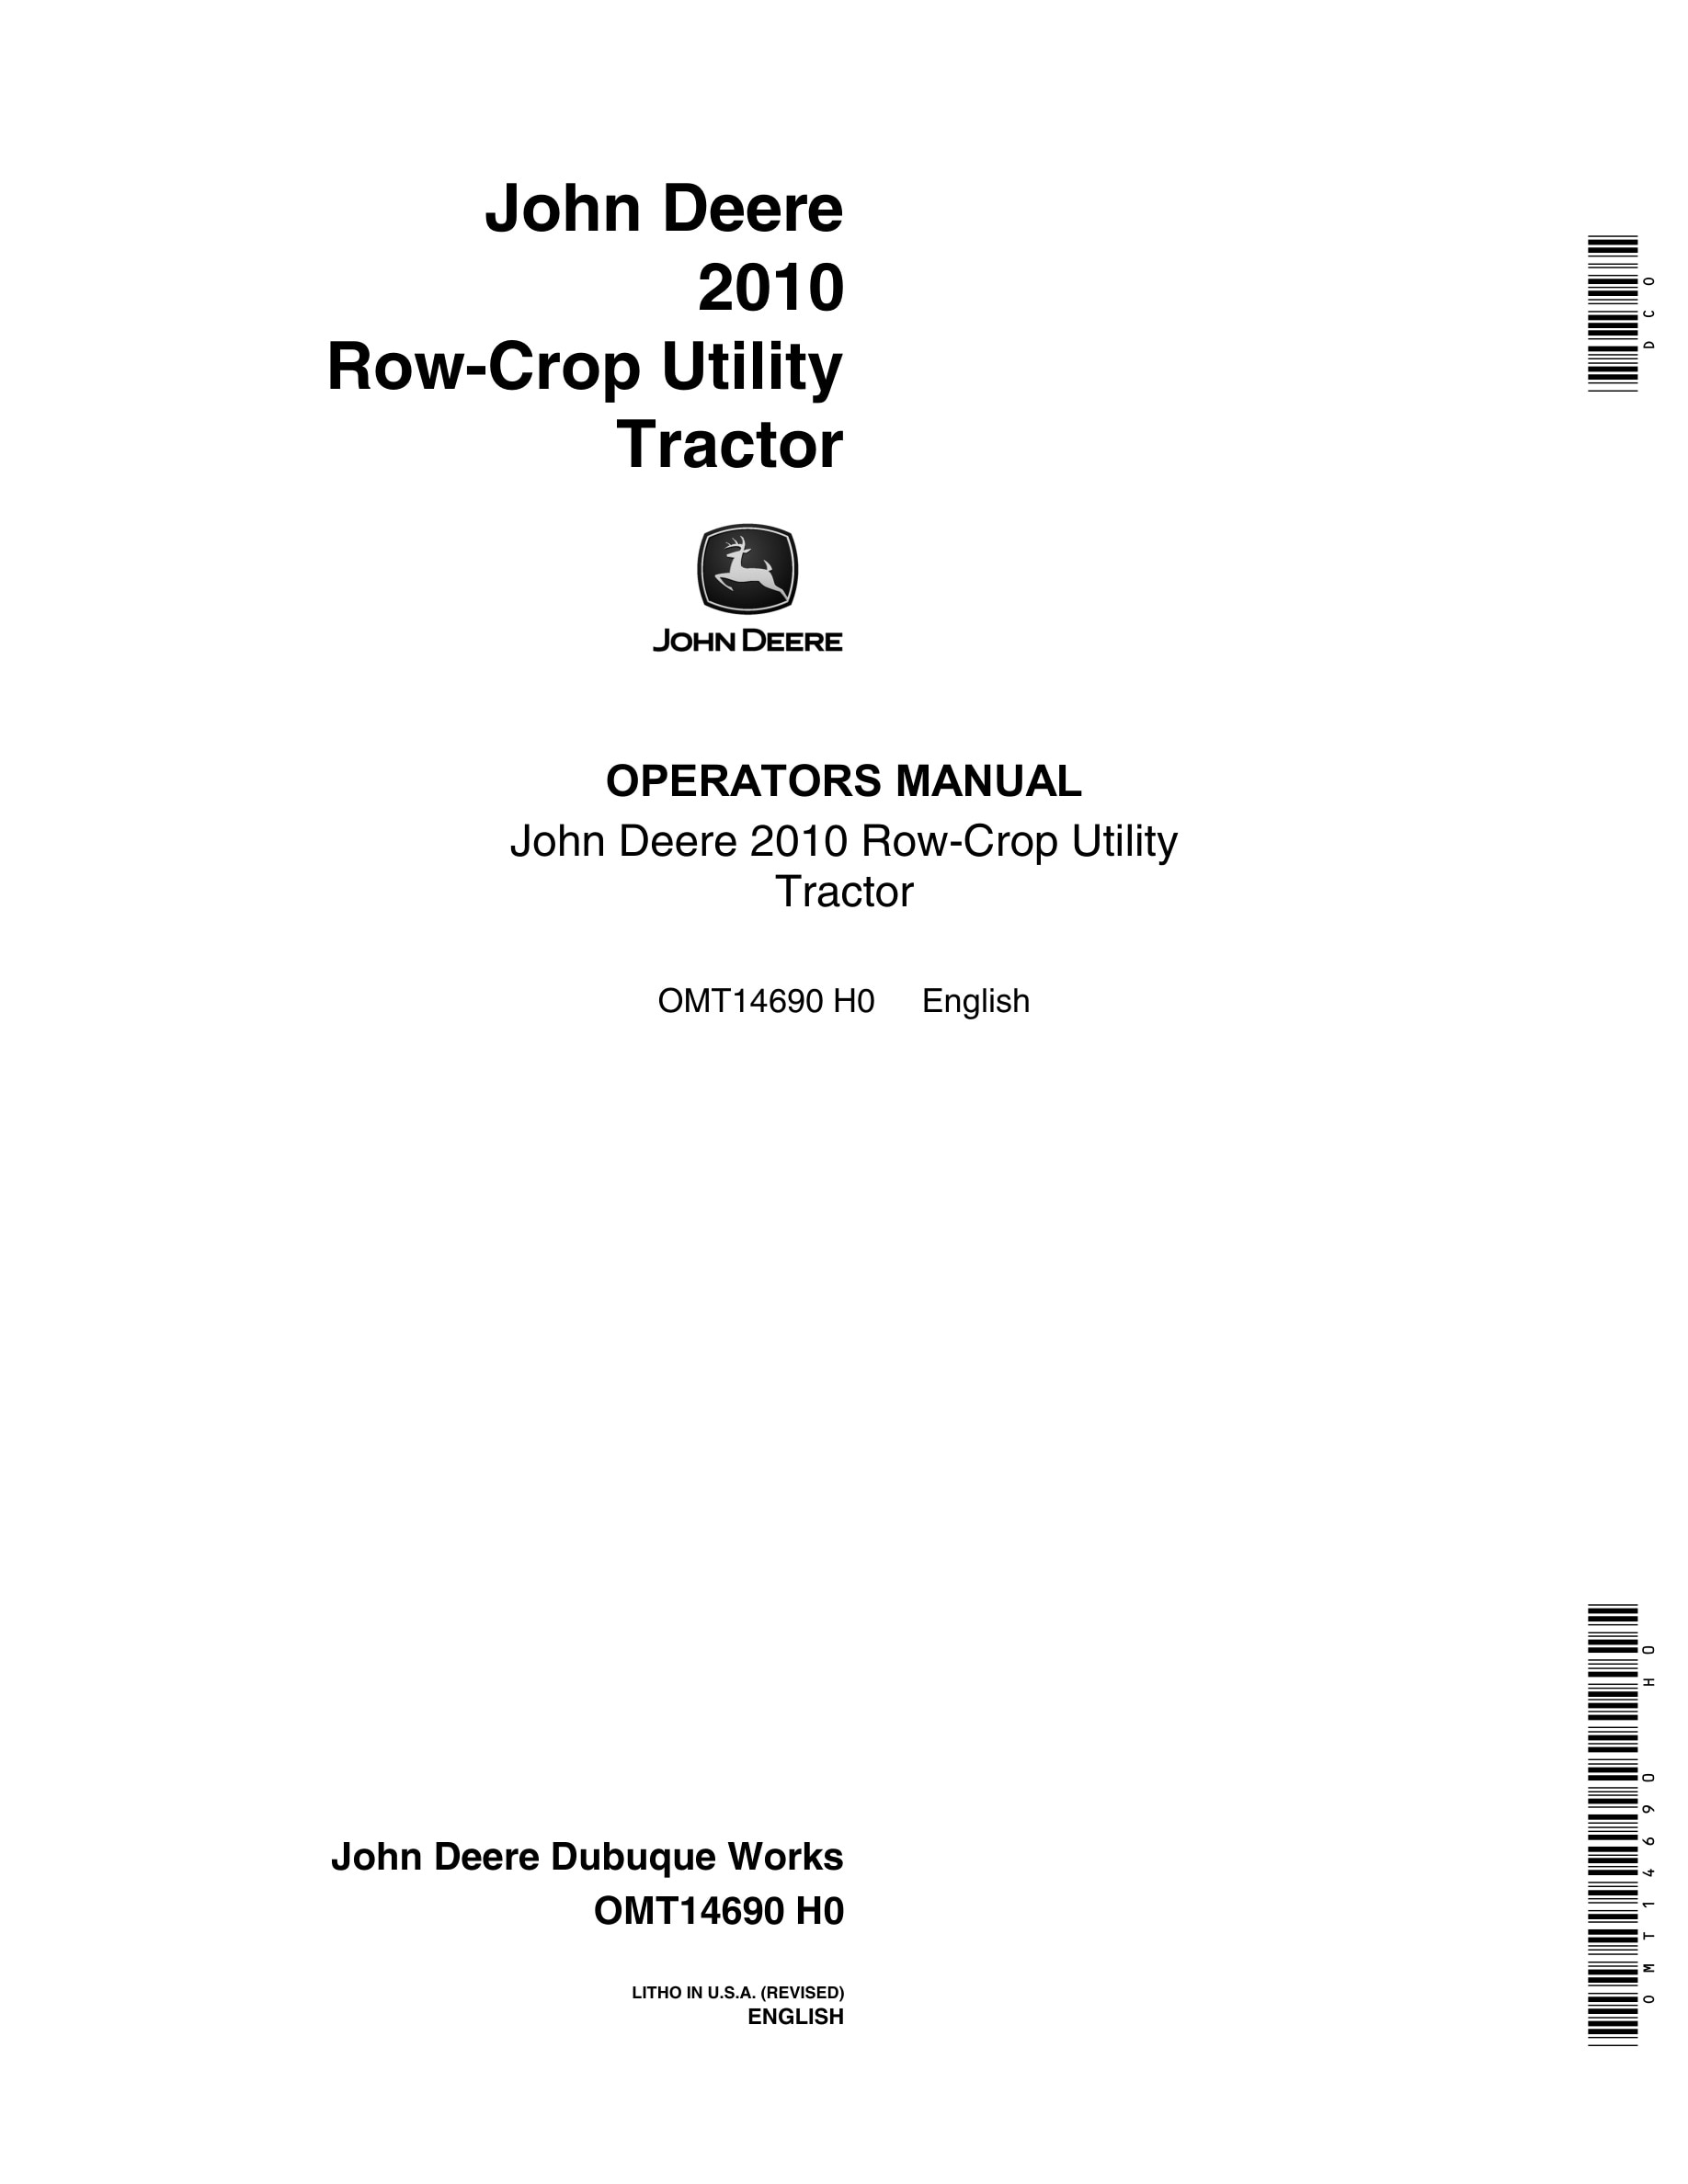 John Deere 2010 Row-crop Utility Tractors Operator Manual OMT14690-1